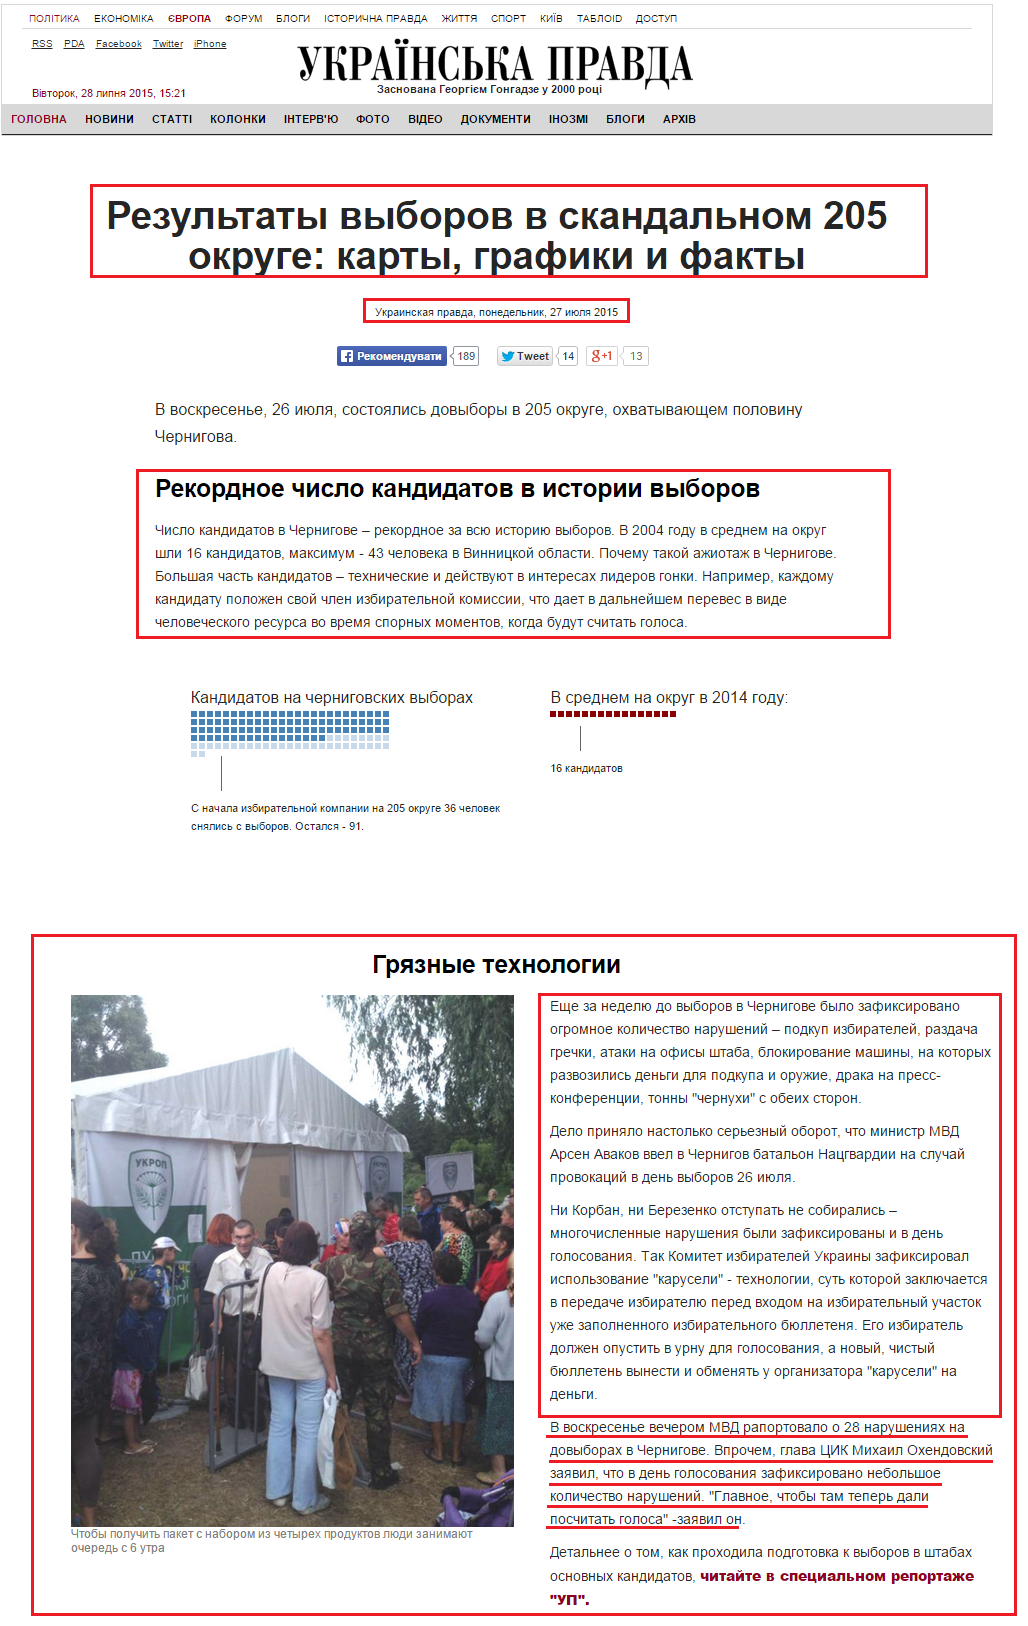 http://www.pravda.com.ua/cdn/cd1/2015year/205/index.html